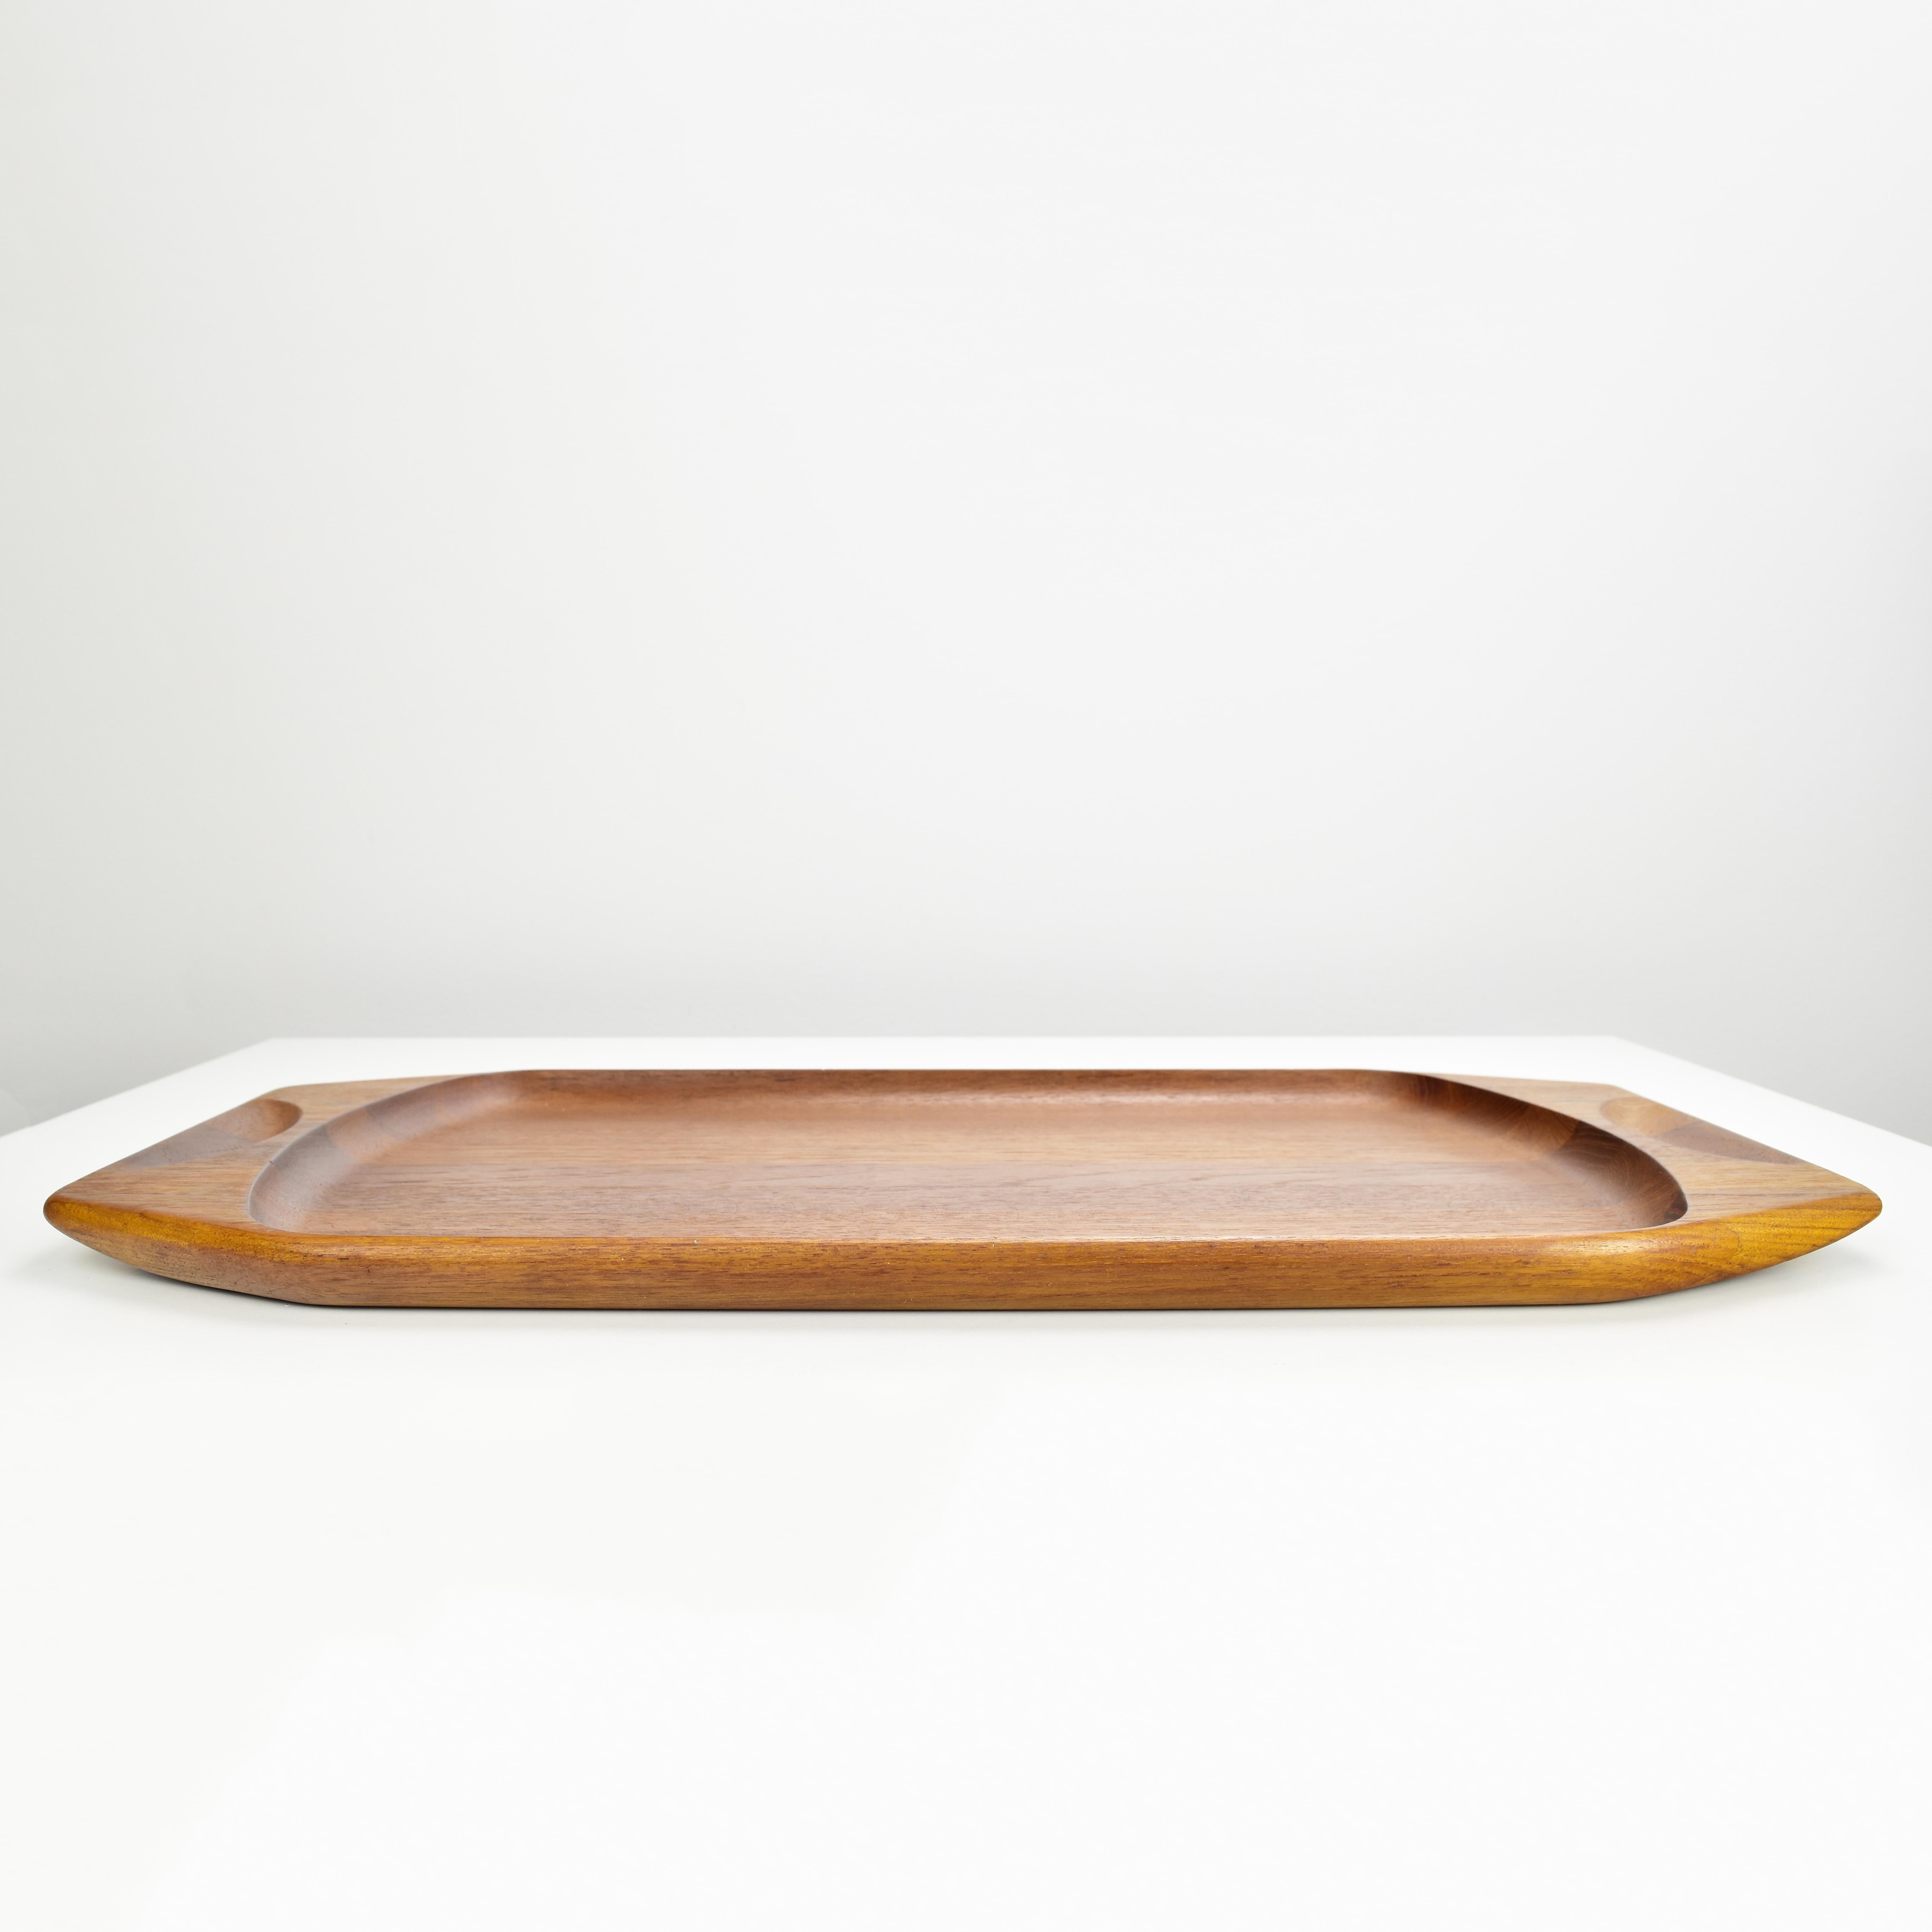 Mid-20th Century 1950s Danish Modern Design Teak Wood Serving Tray by Jens Quistgaard Dansk MCM For Sale